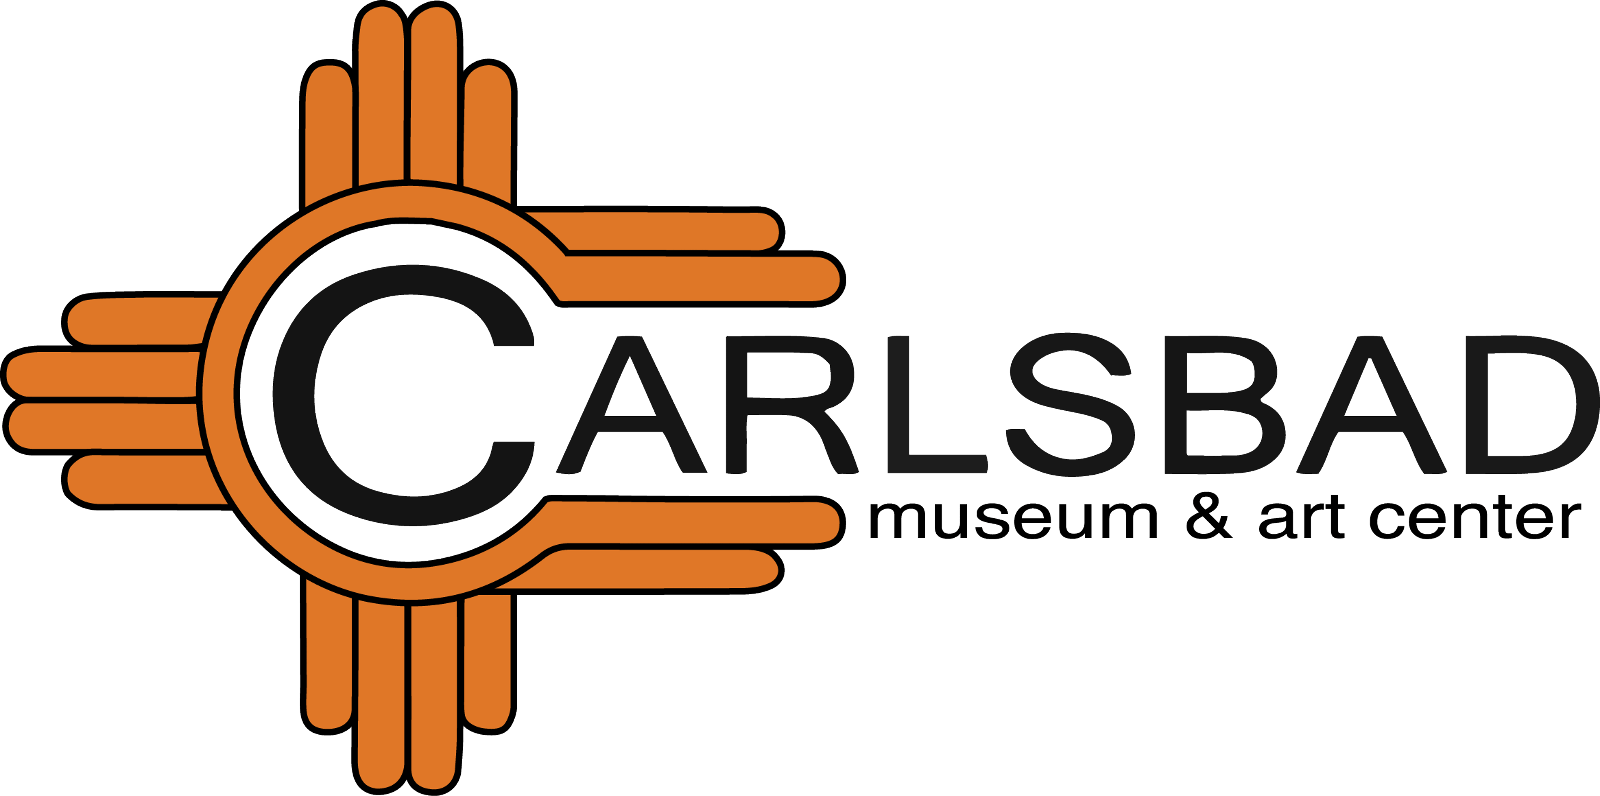 Carlsbad Logo - Carlsbad Museum and Art Center. Carlsbad, New Mexico